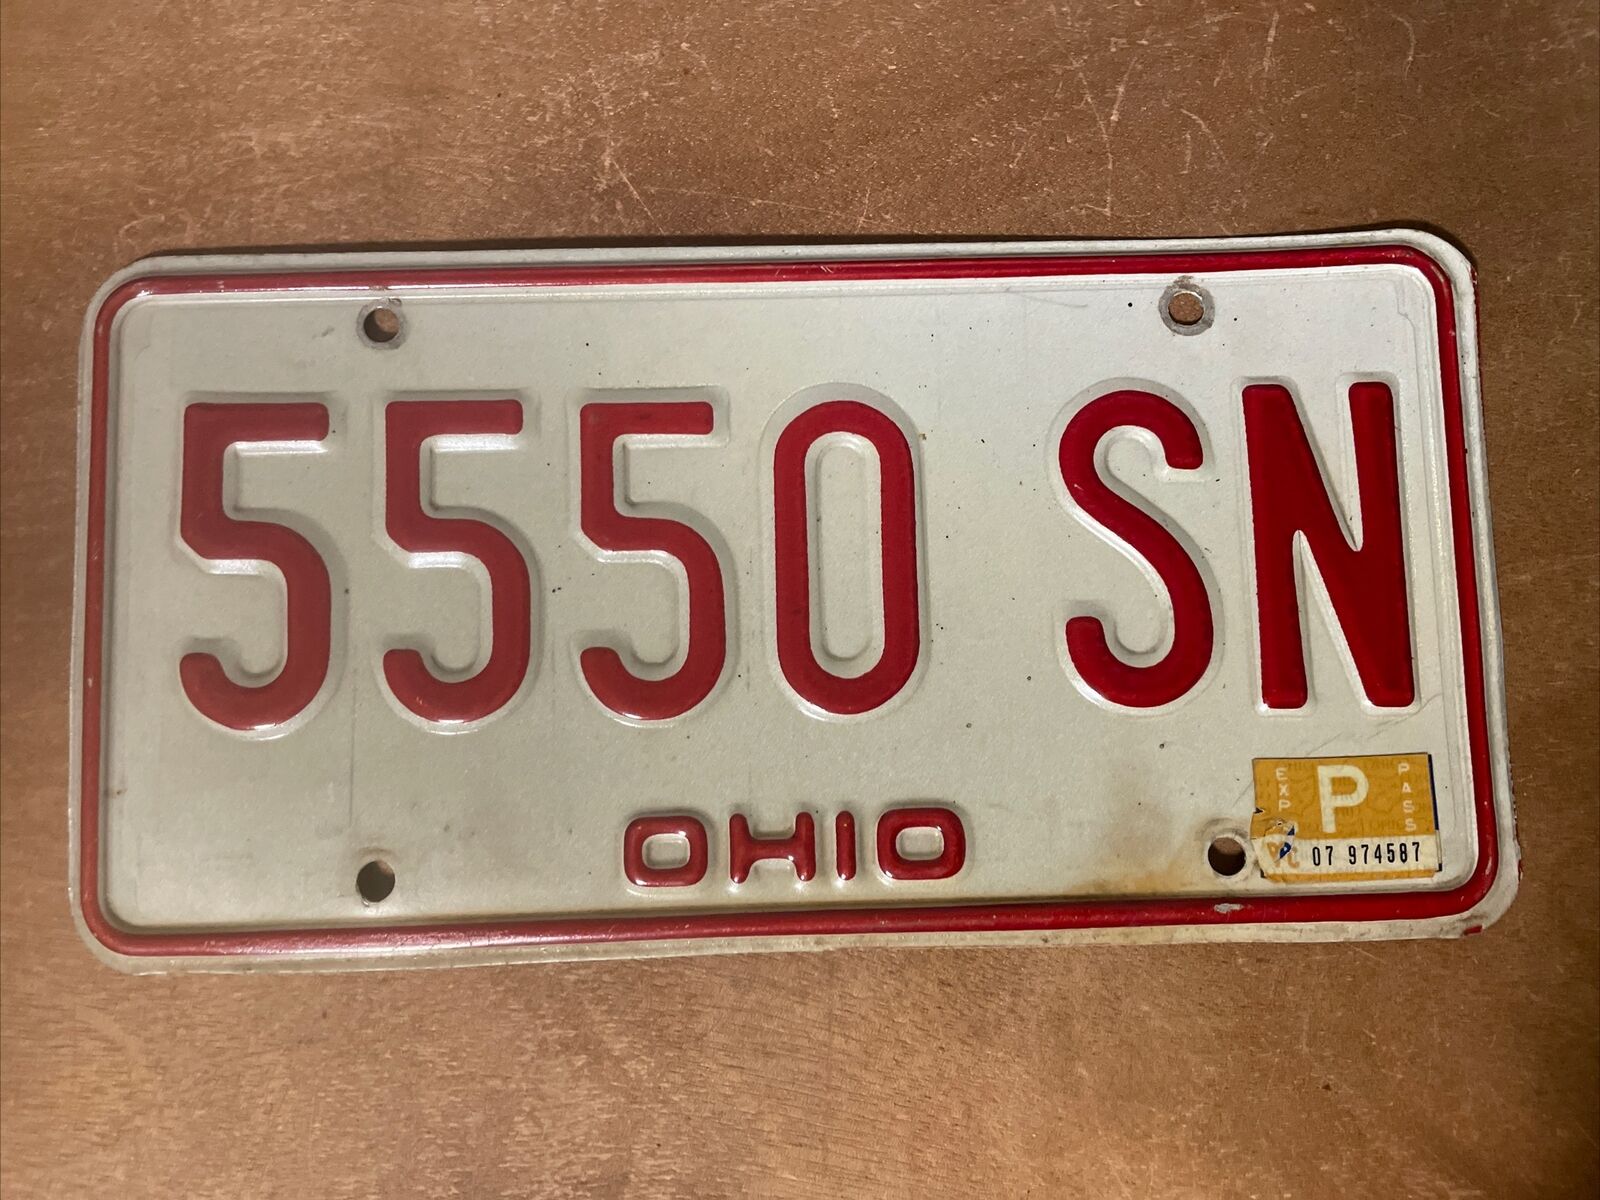 1979 Ohio License Plate # 5550 SN